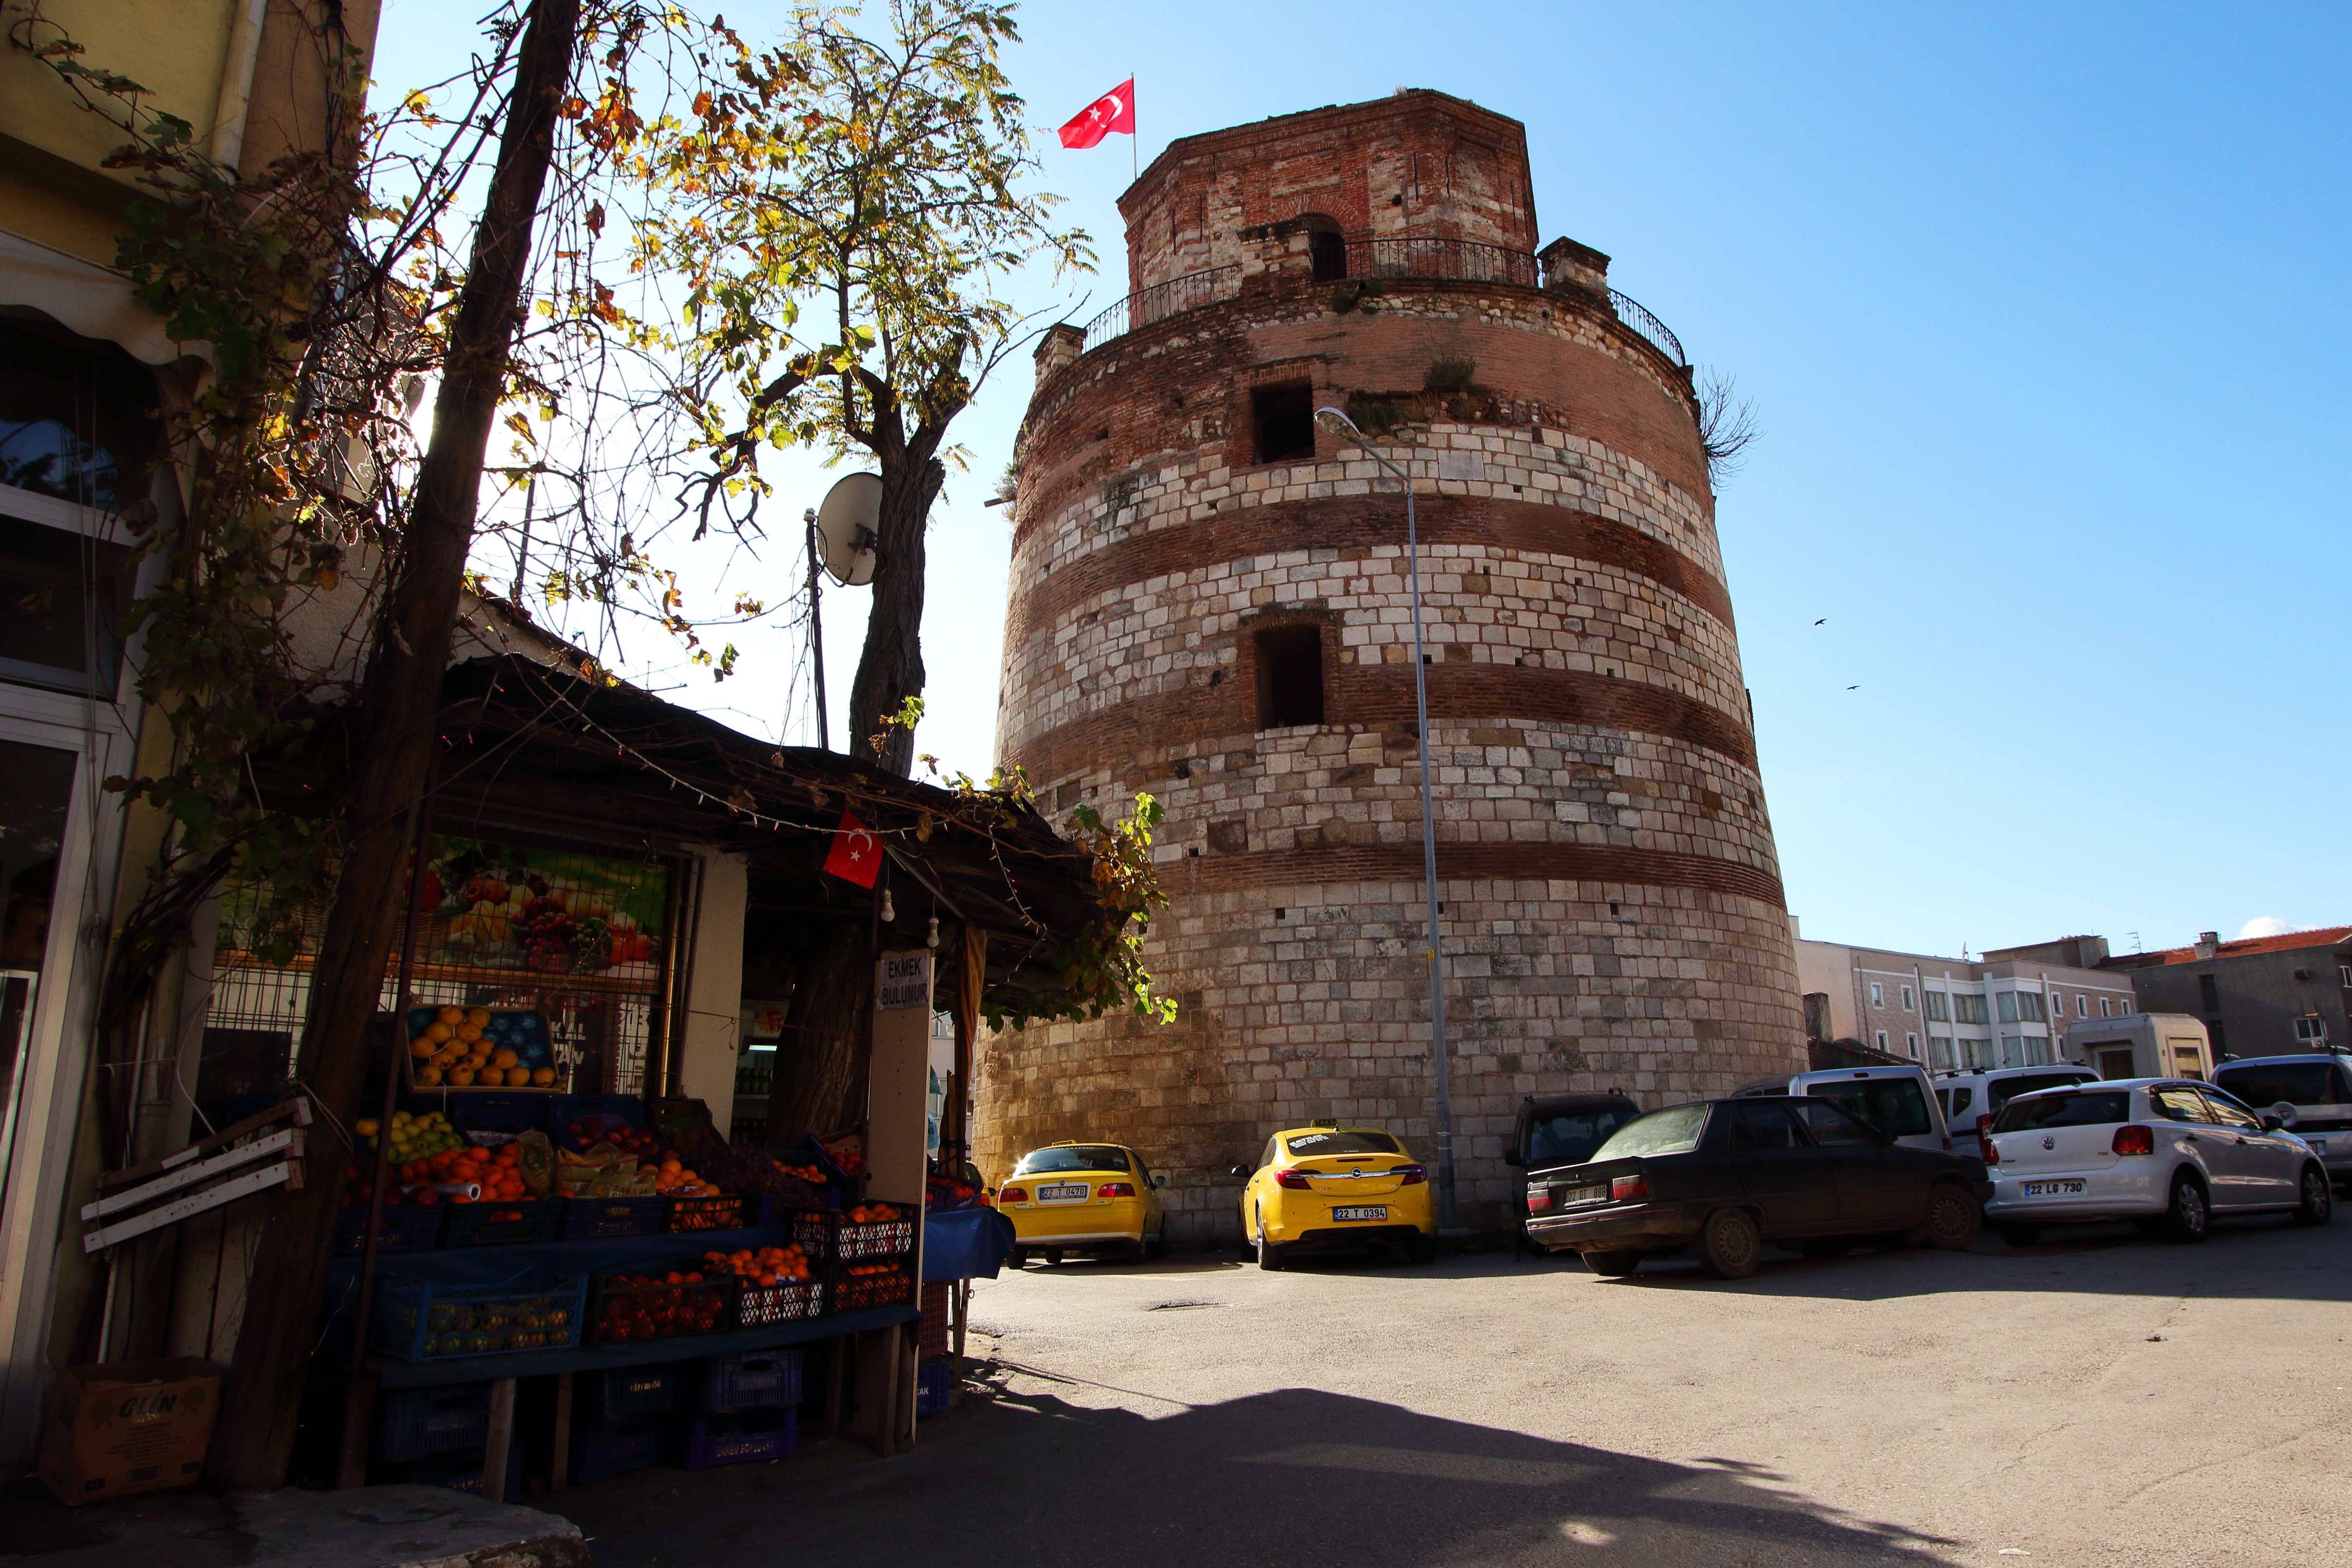 The City of Edirne | The Art of Wayfaring